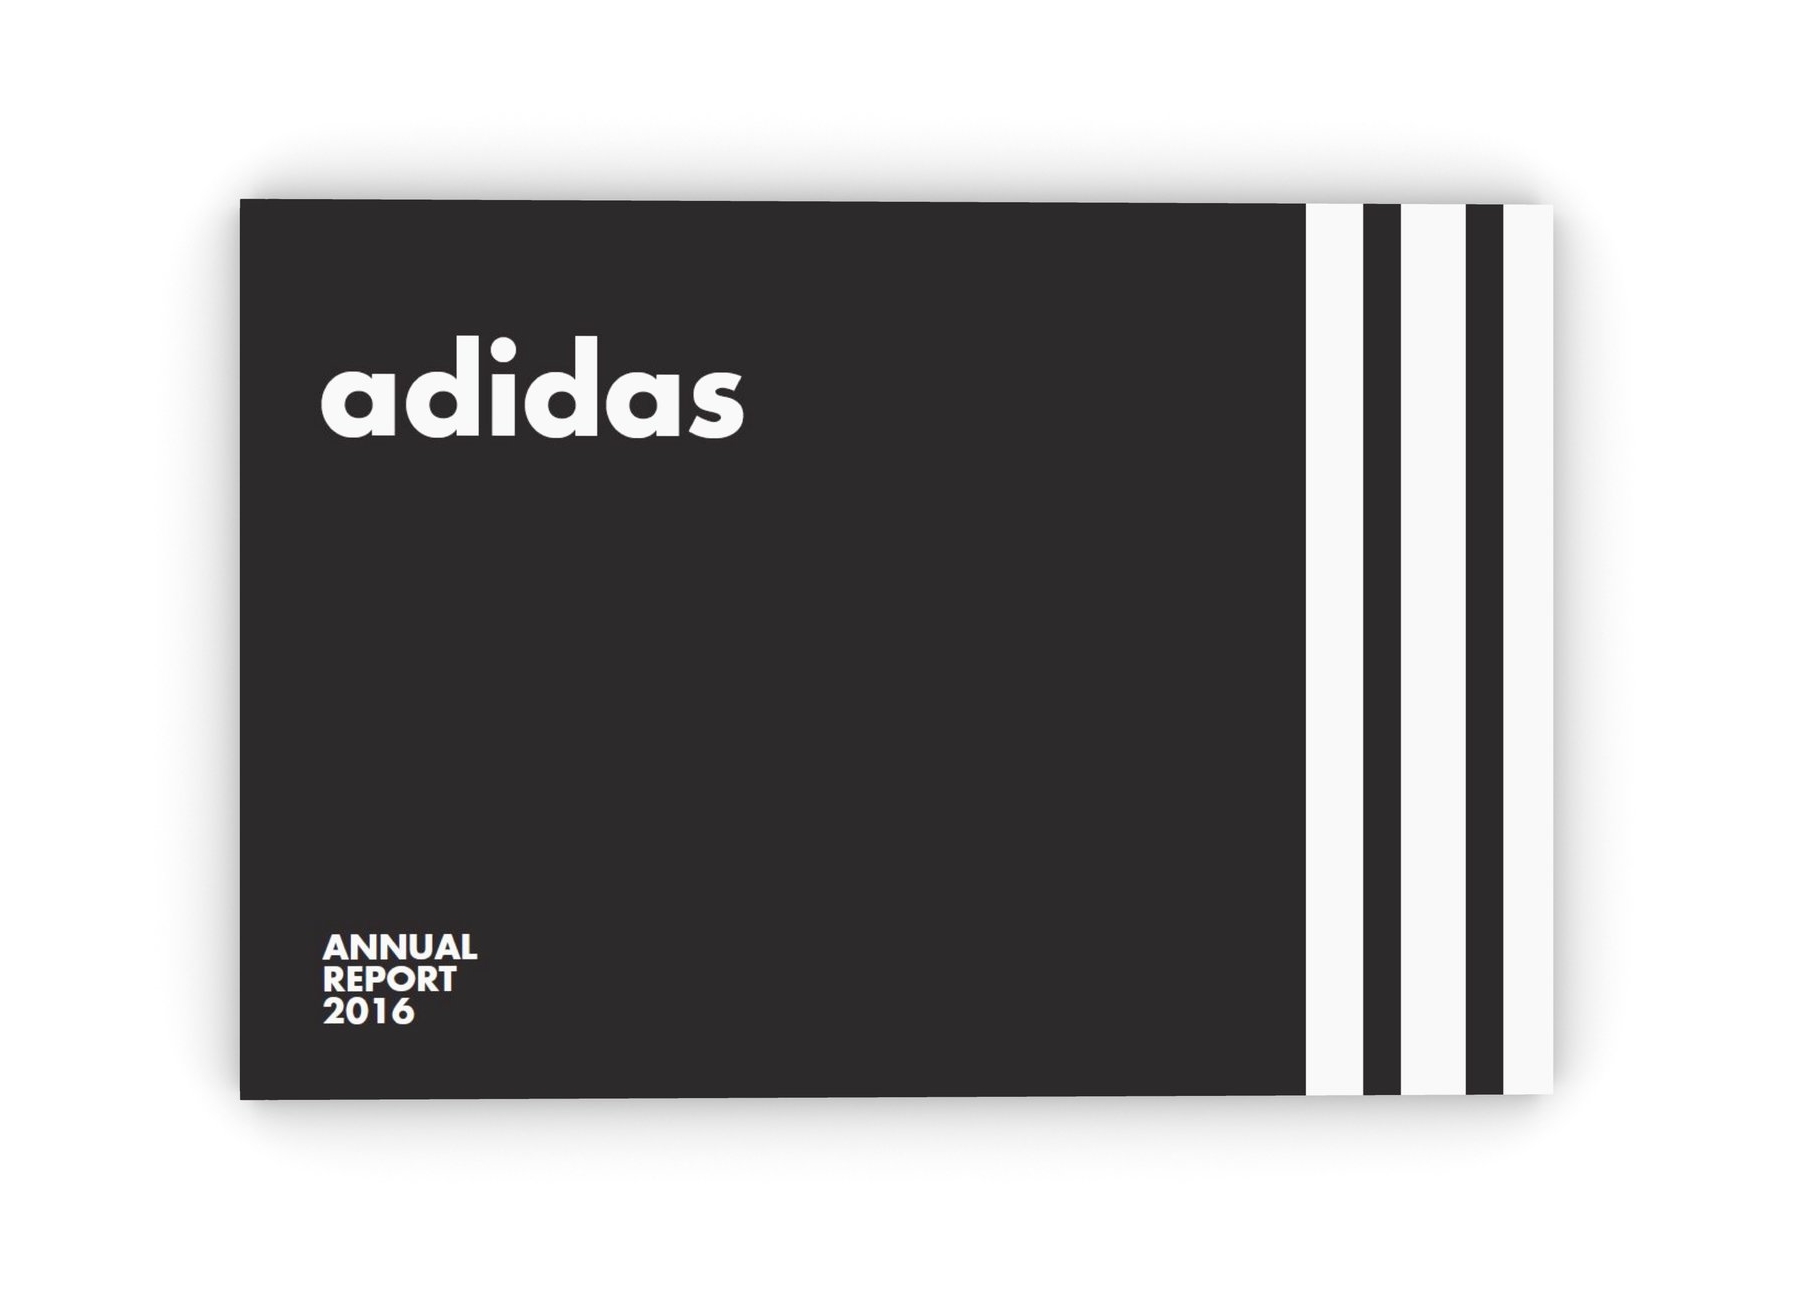 Discreto patrocinador Volver a disparar Adidas 2016 Annual Report, Buy Now, Factory Sale, 50% OFF,  www.busformentera.com